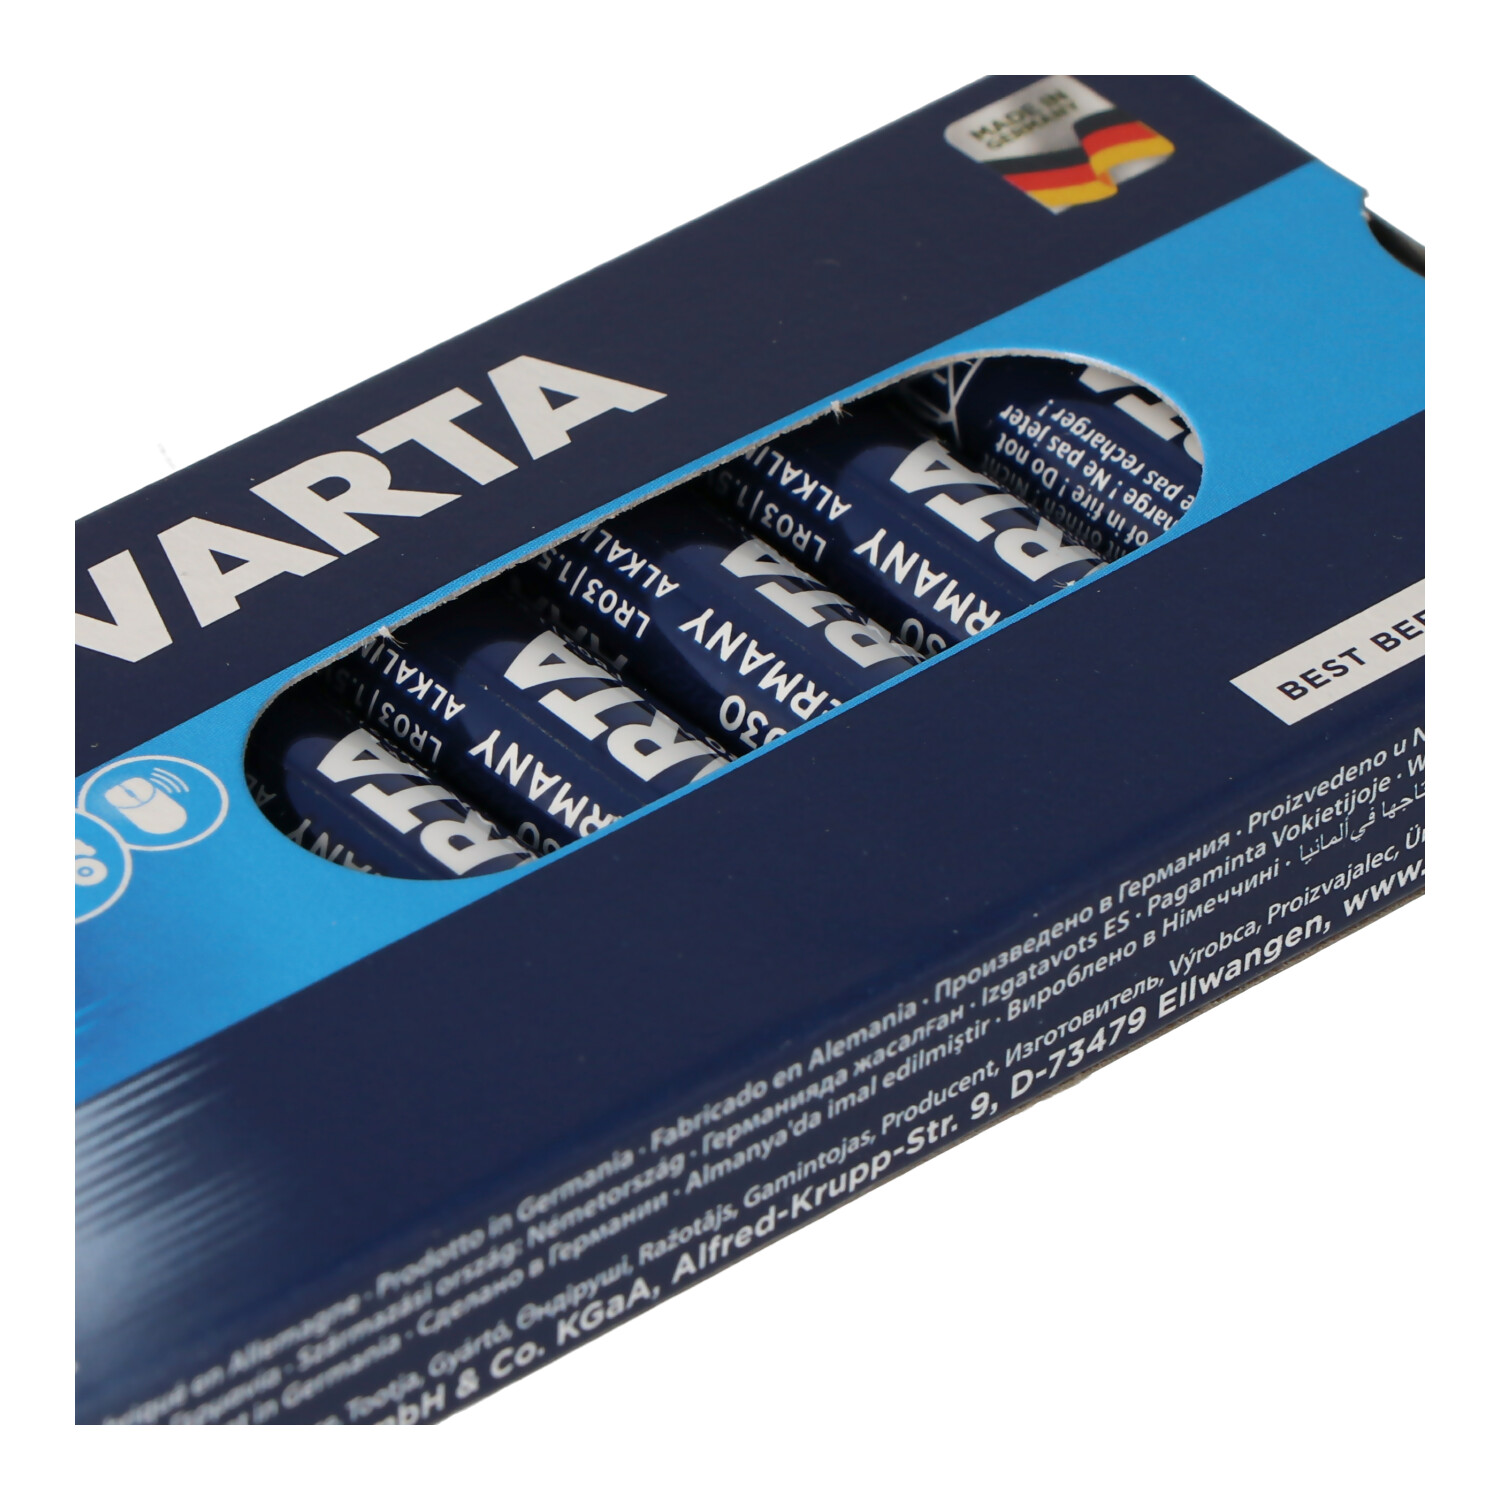 Varta Longlife Power (ehem. High Energy) Micro AAA Batterien 4903 High Energy 10er Box